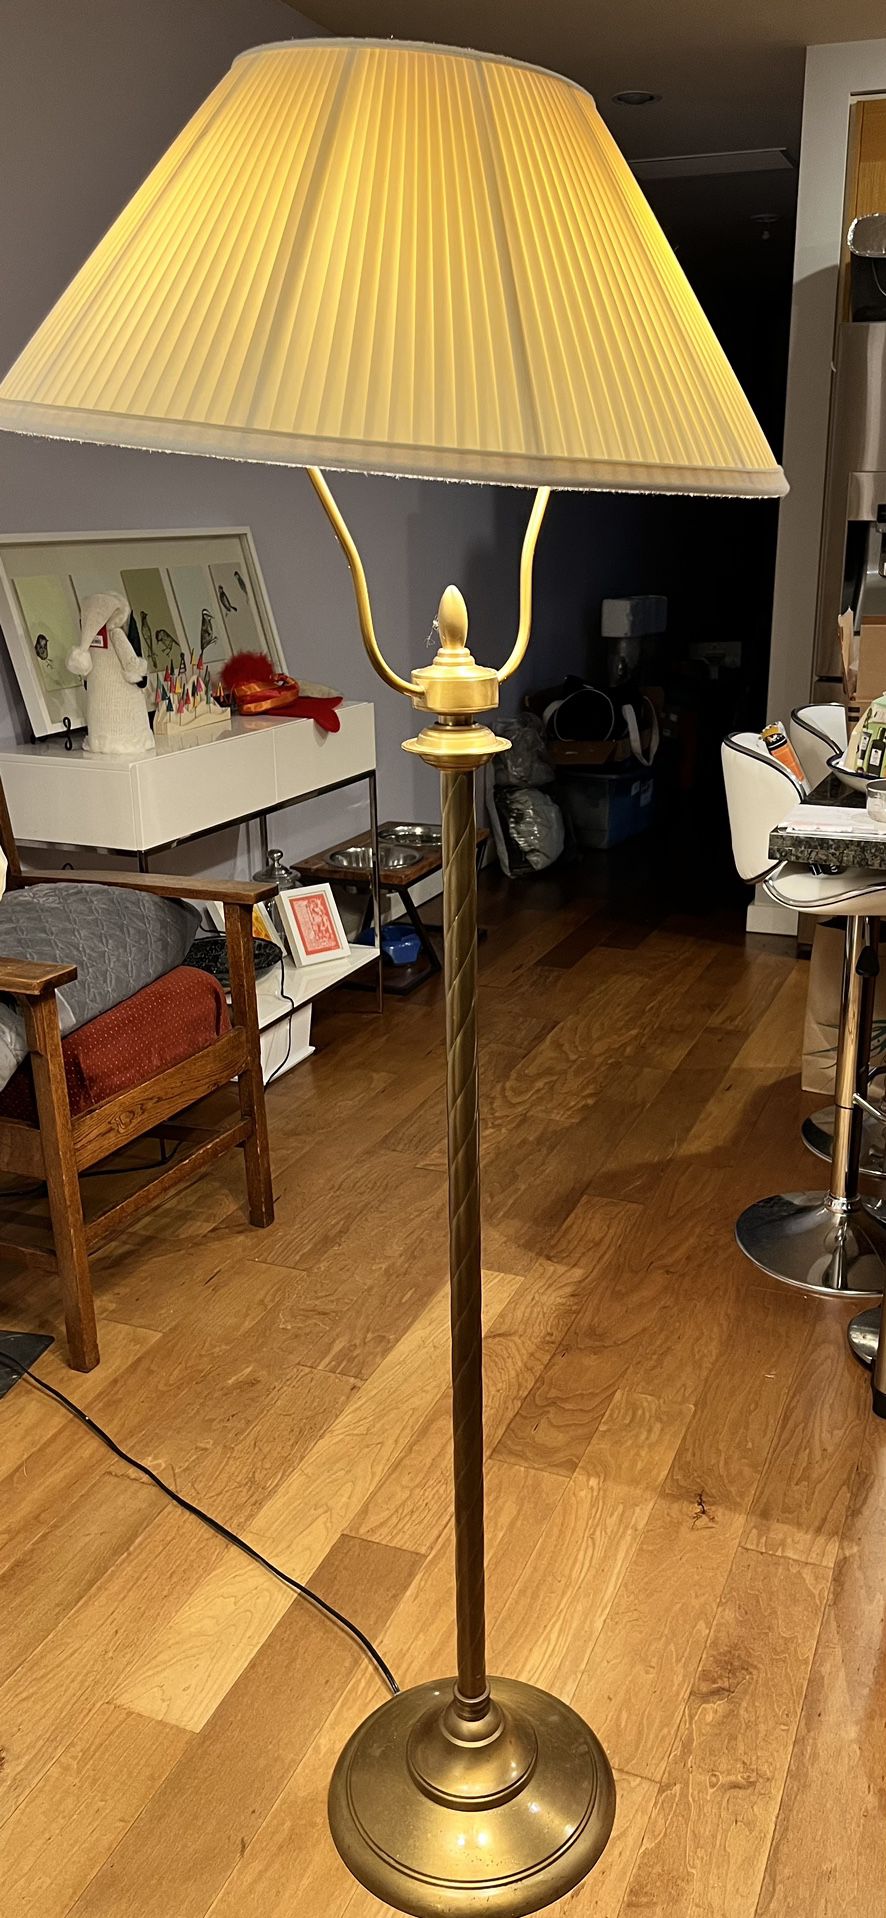 Traditional Standing Italian Floor Lamp $30.00 Cash